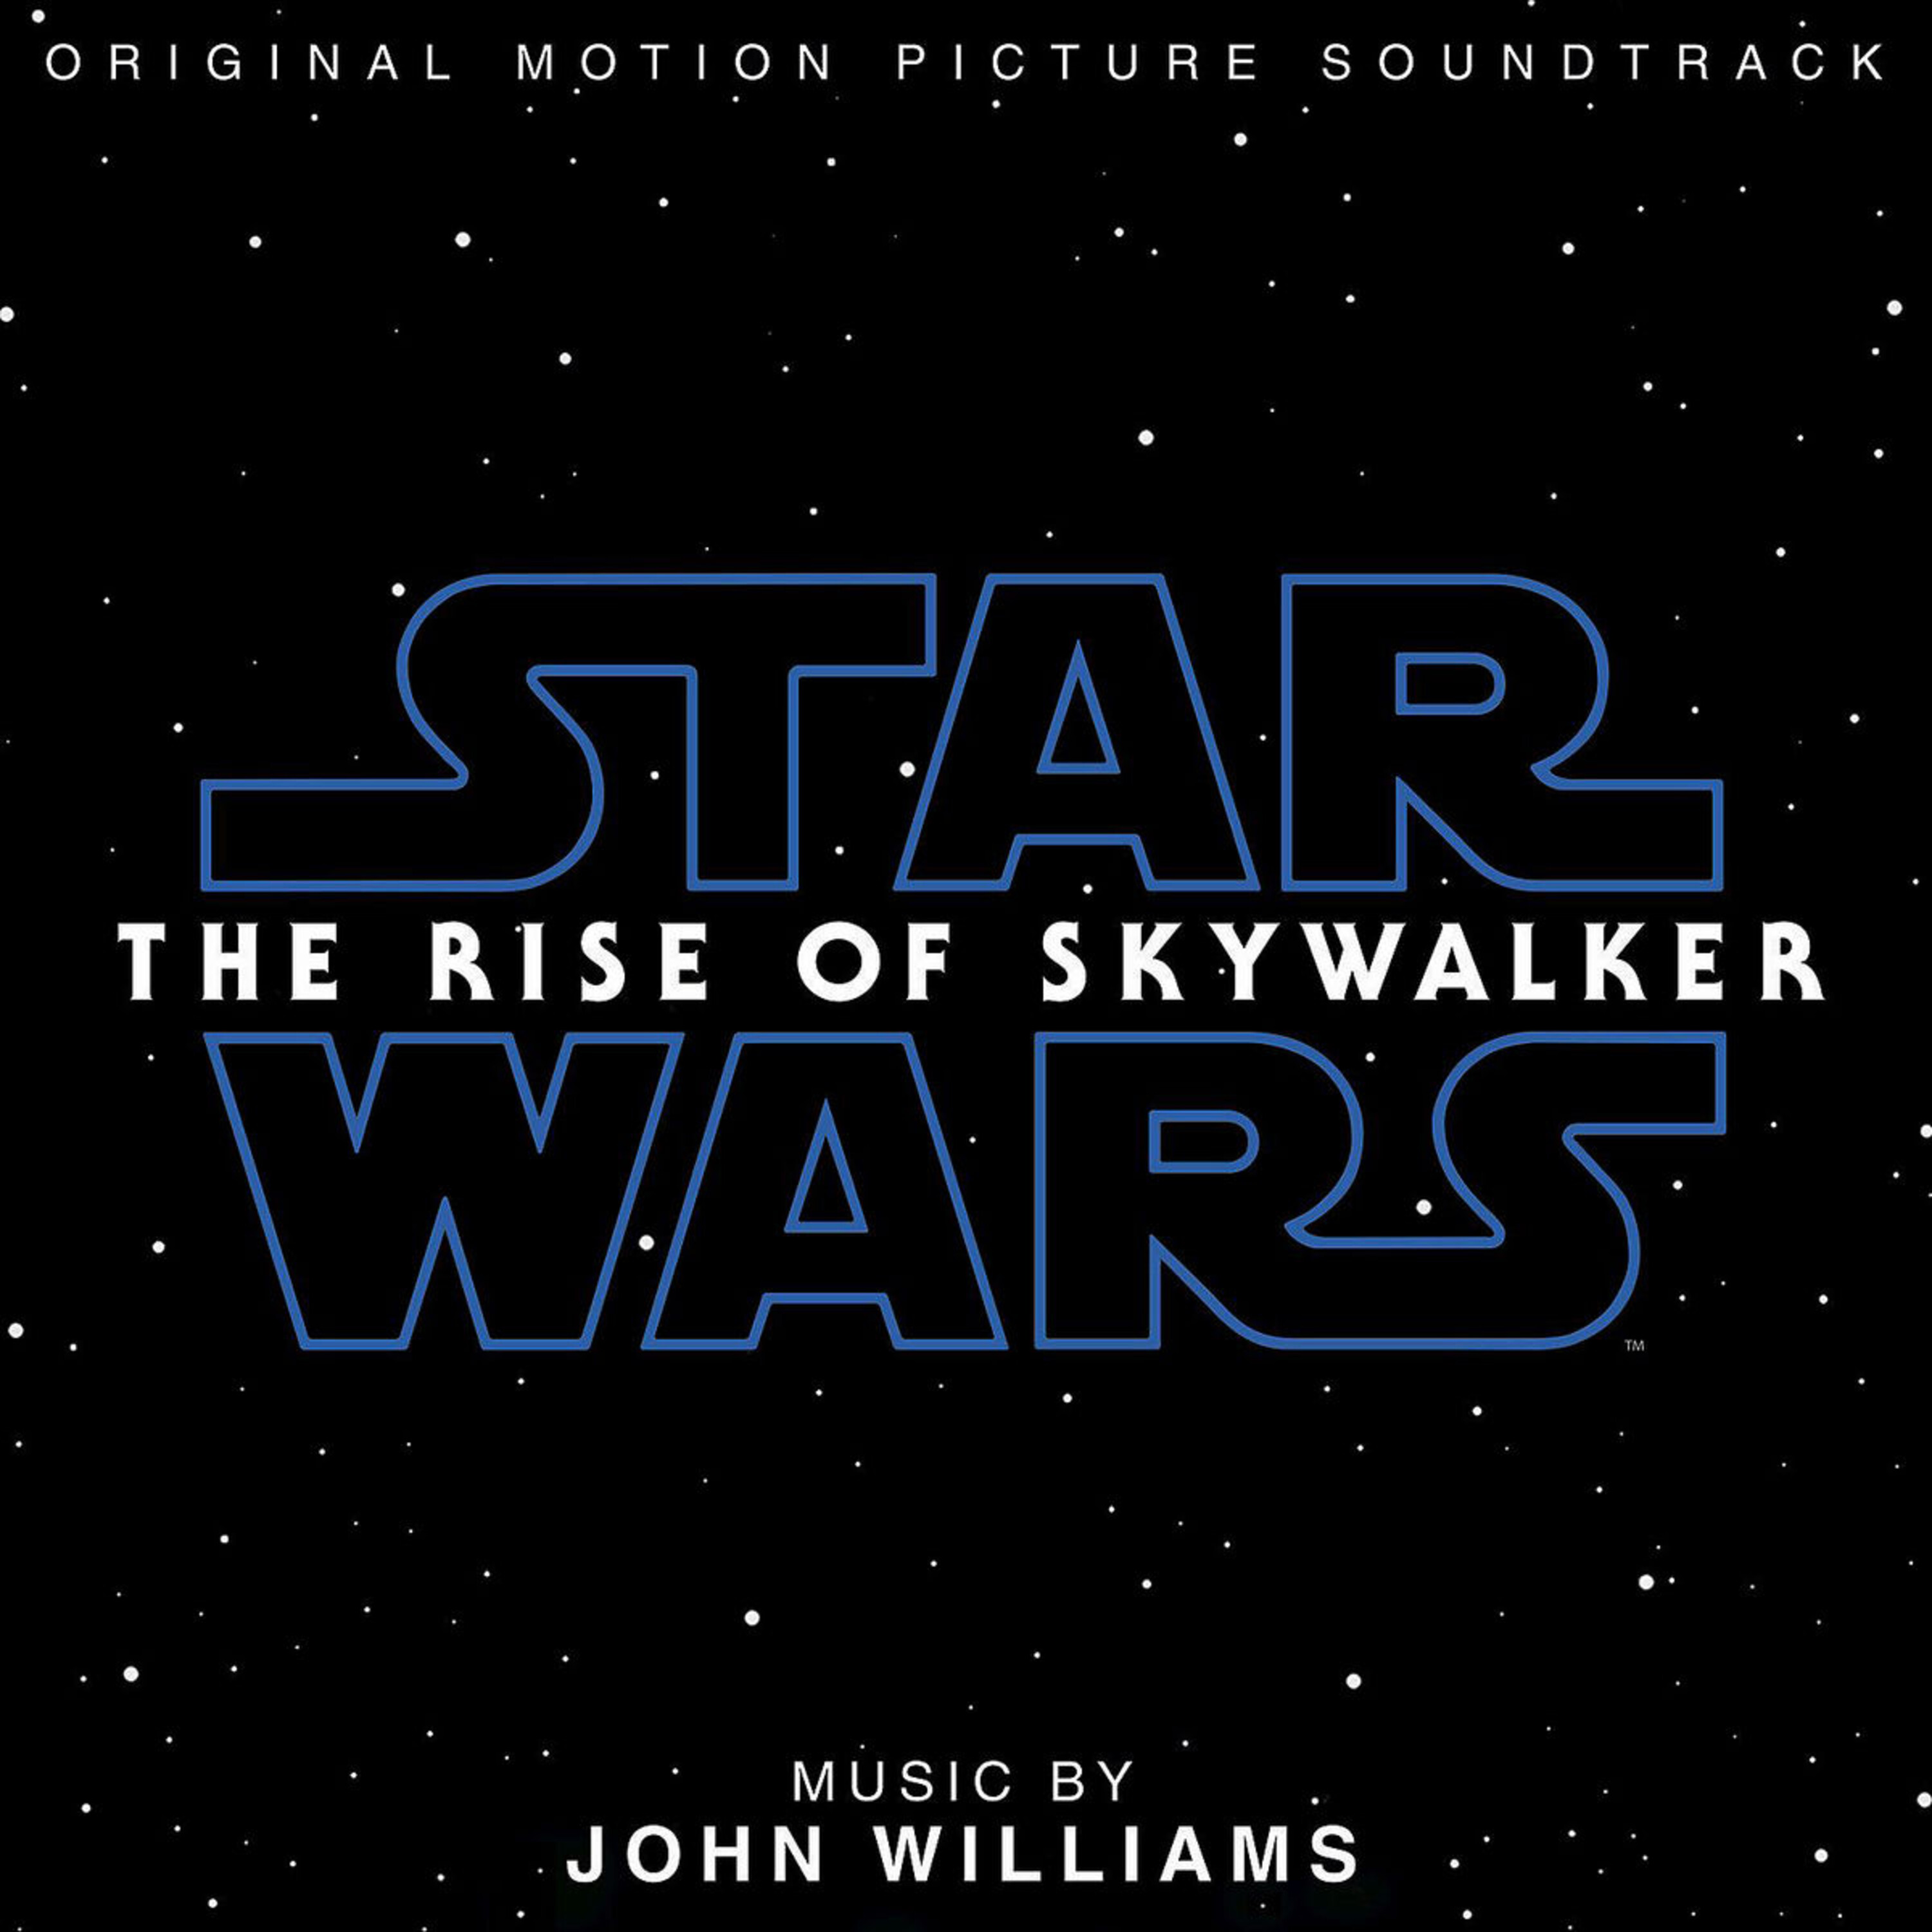 Star wars soundtrack. Звездные войны саундтрек рингтон. John Williams - Star Wars OST (2lp).